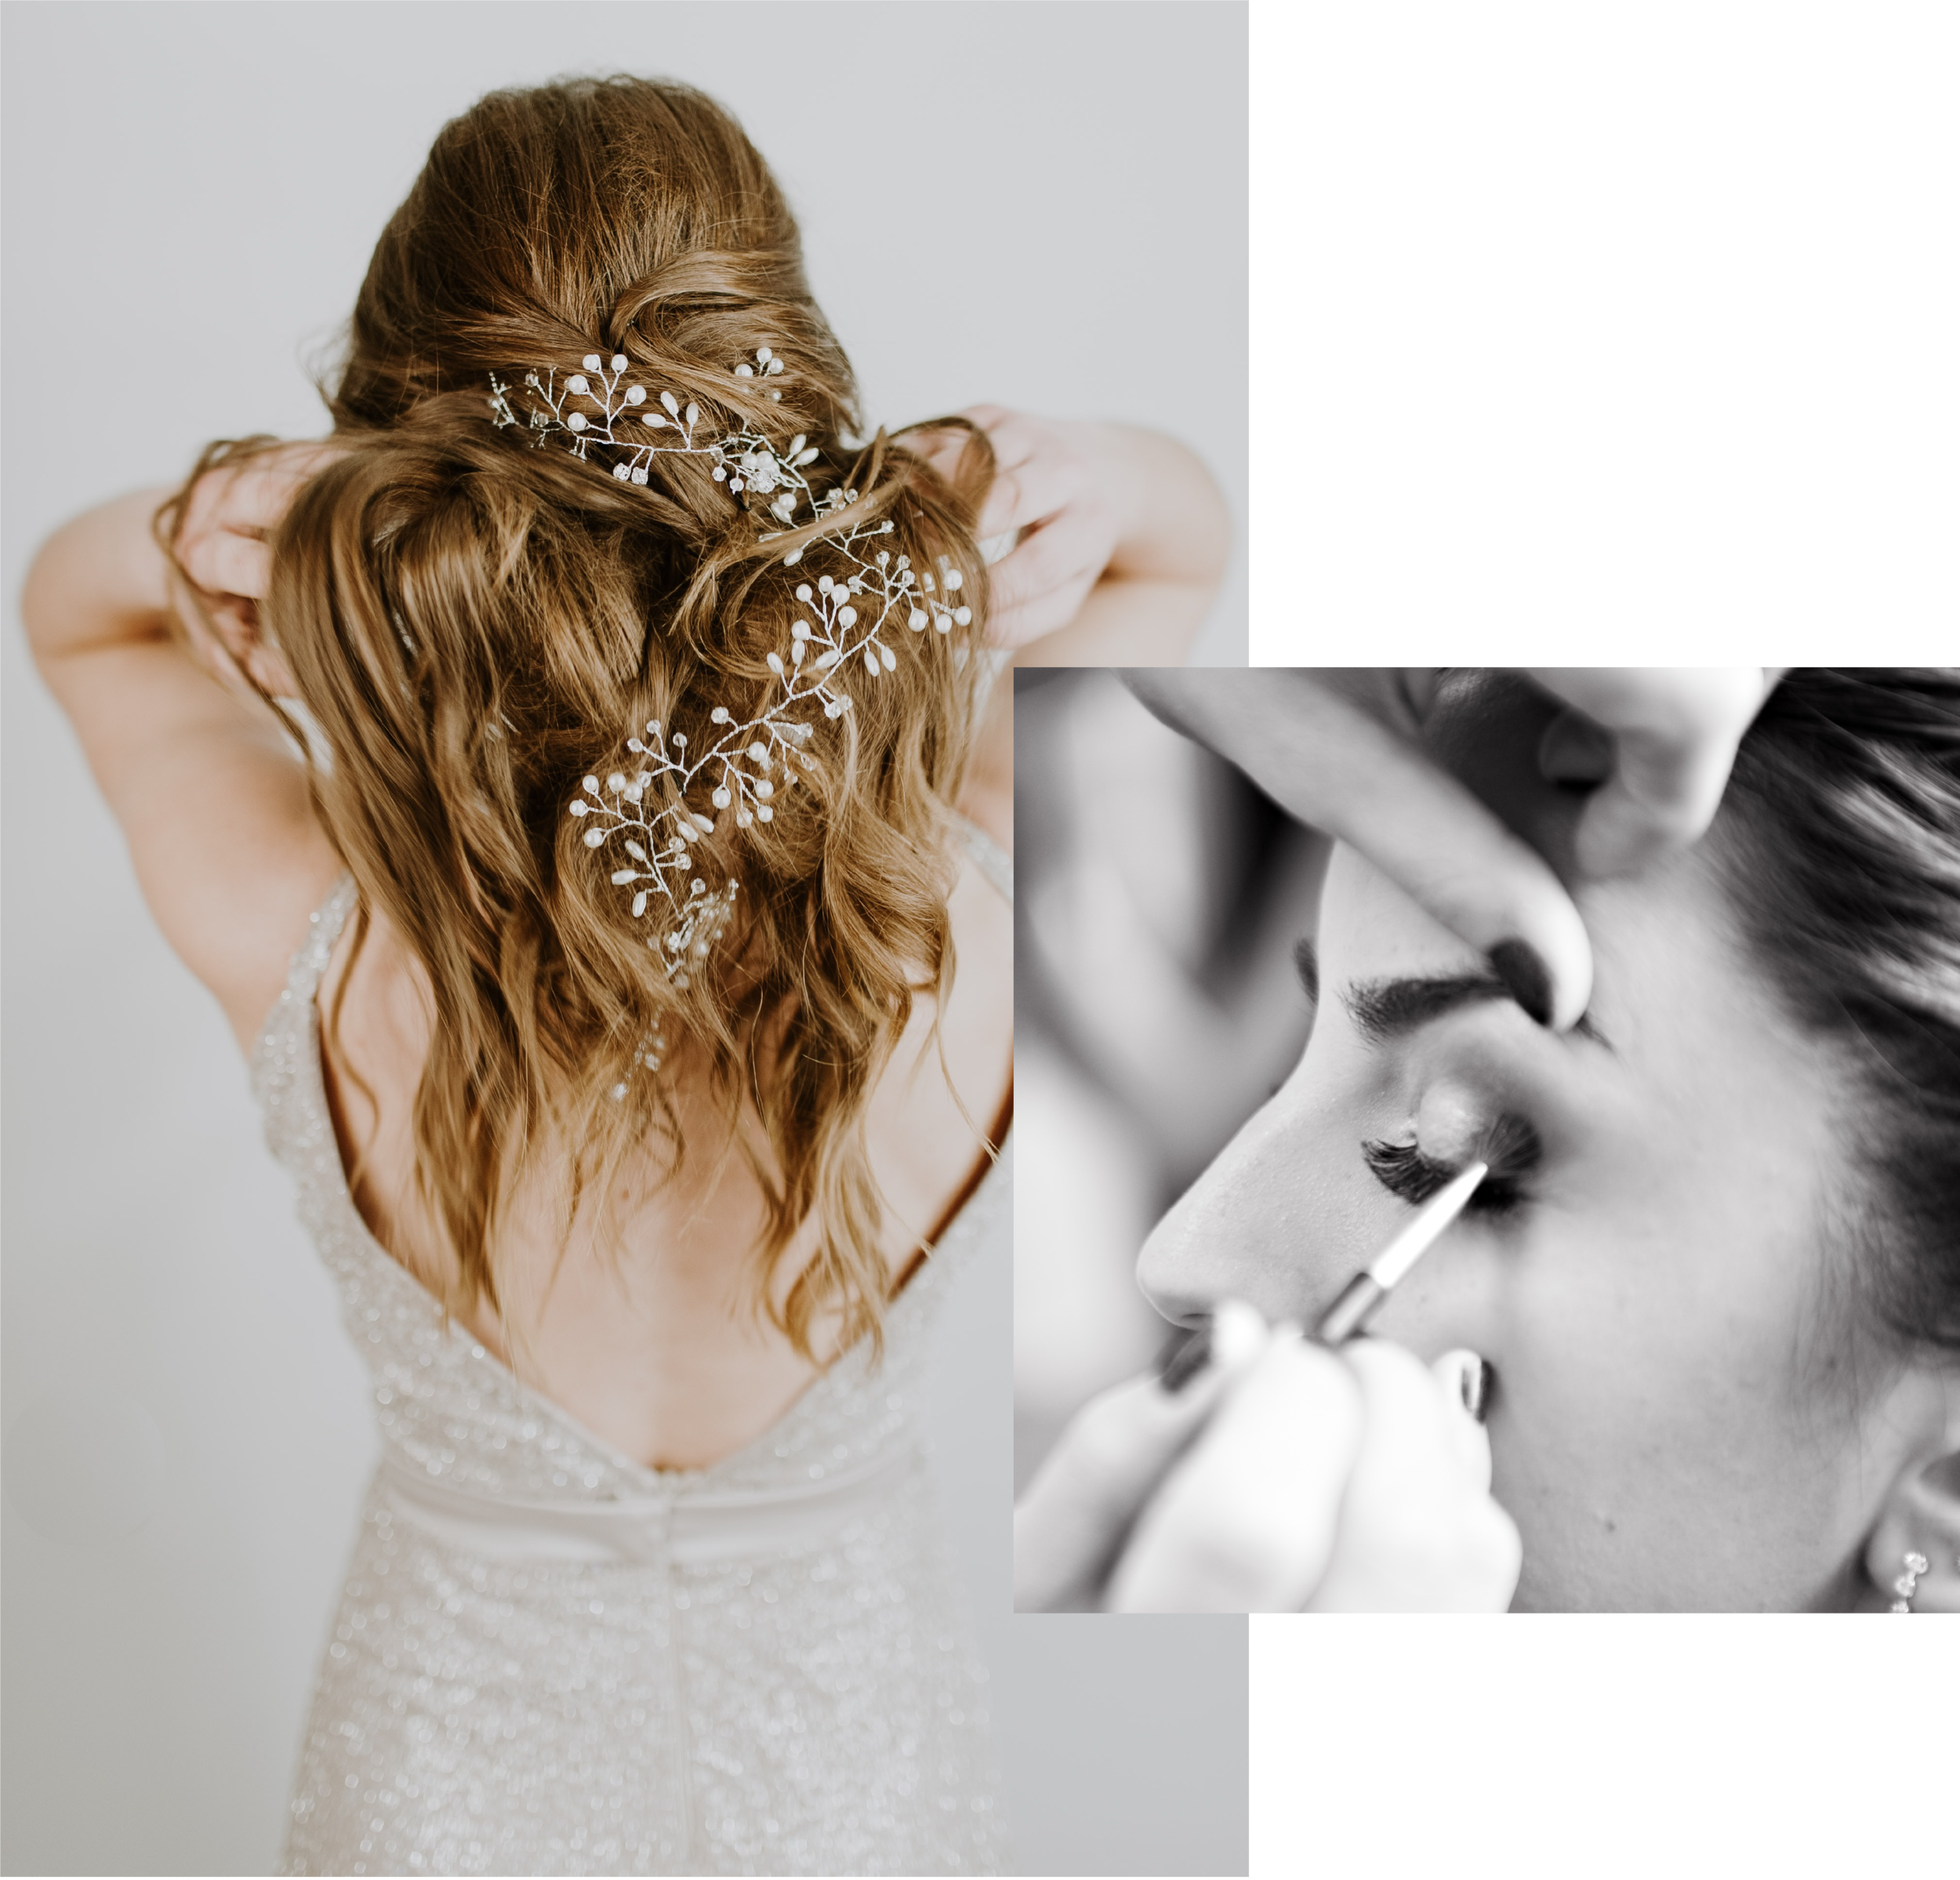 Wedding Hair & Makeup Services — Headliners Salon in Mt. Pleasant, MI